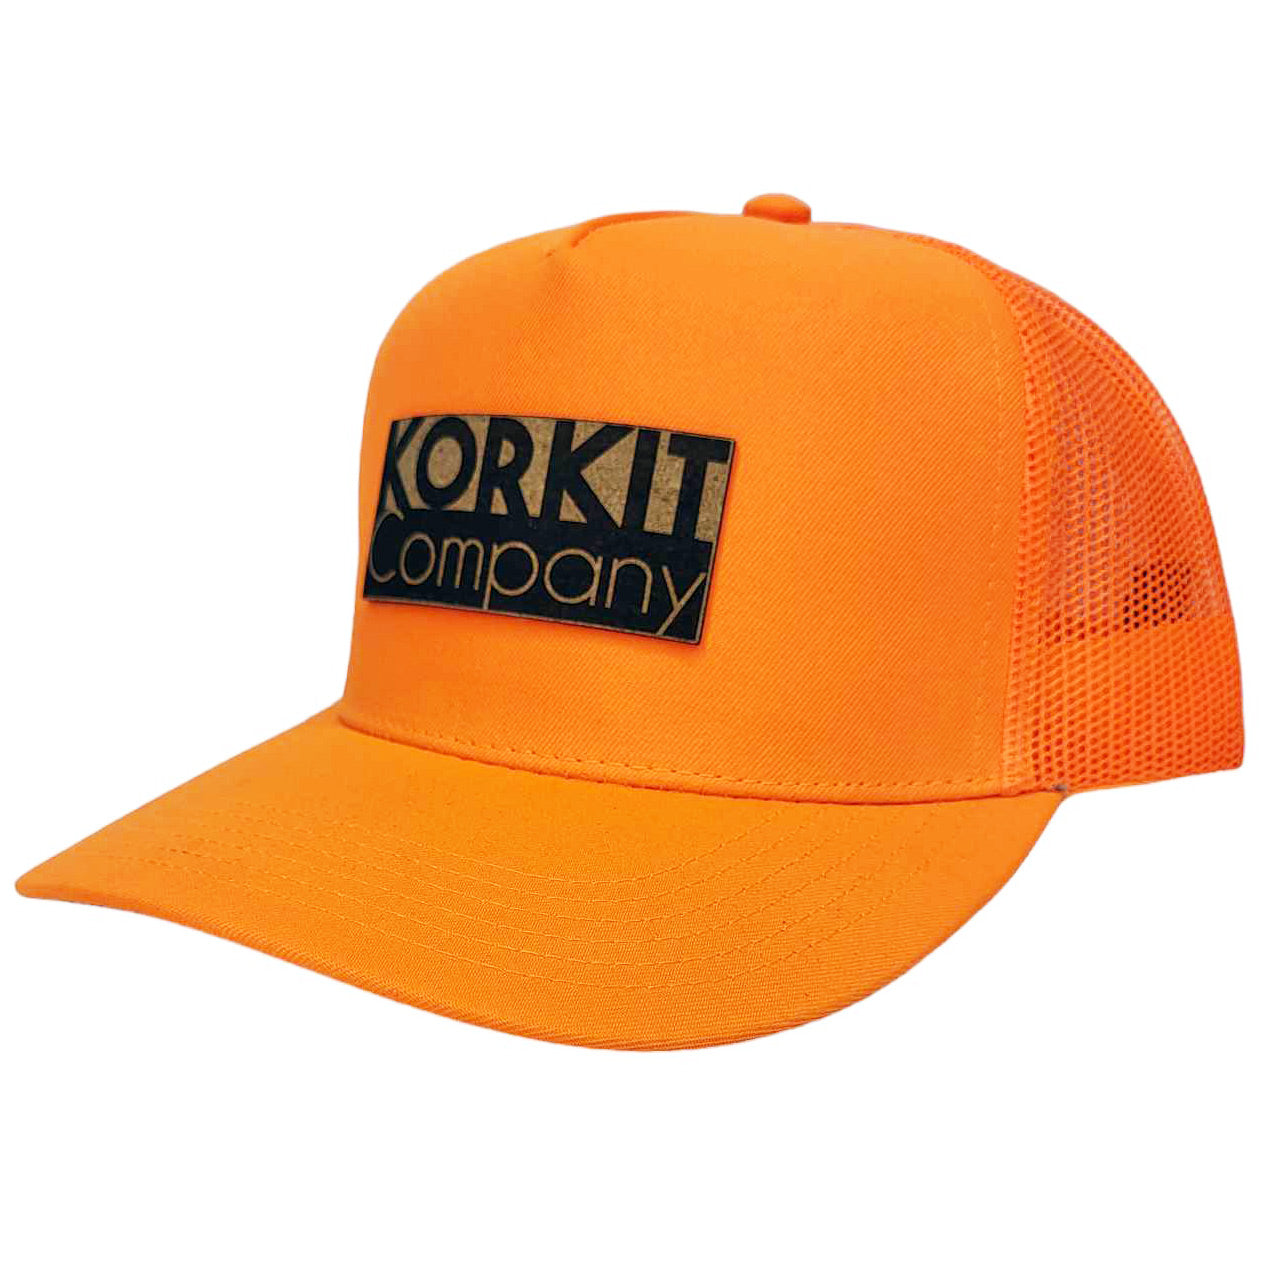 KORKIT Company Hat